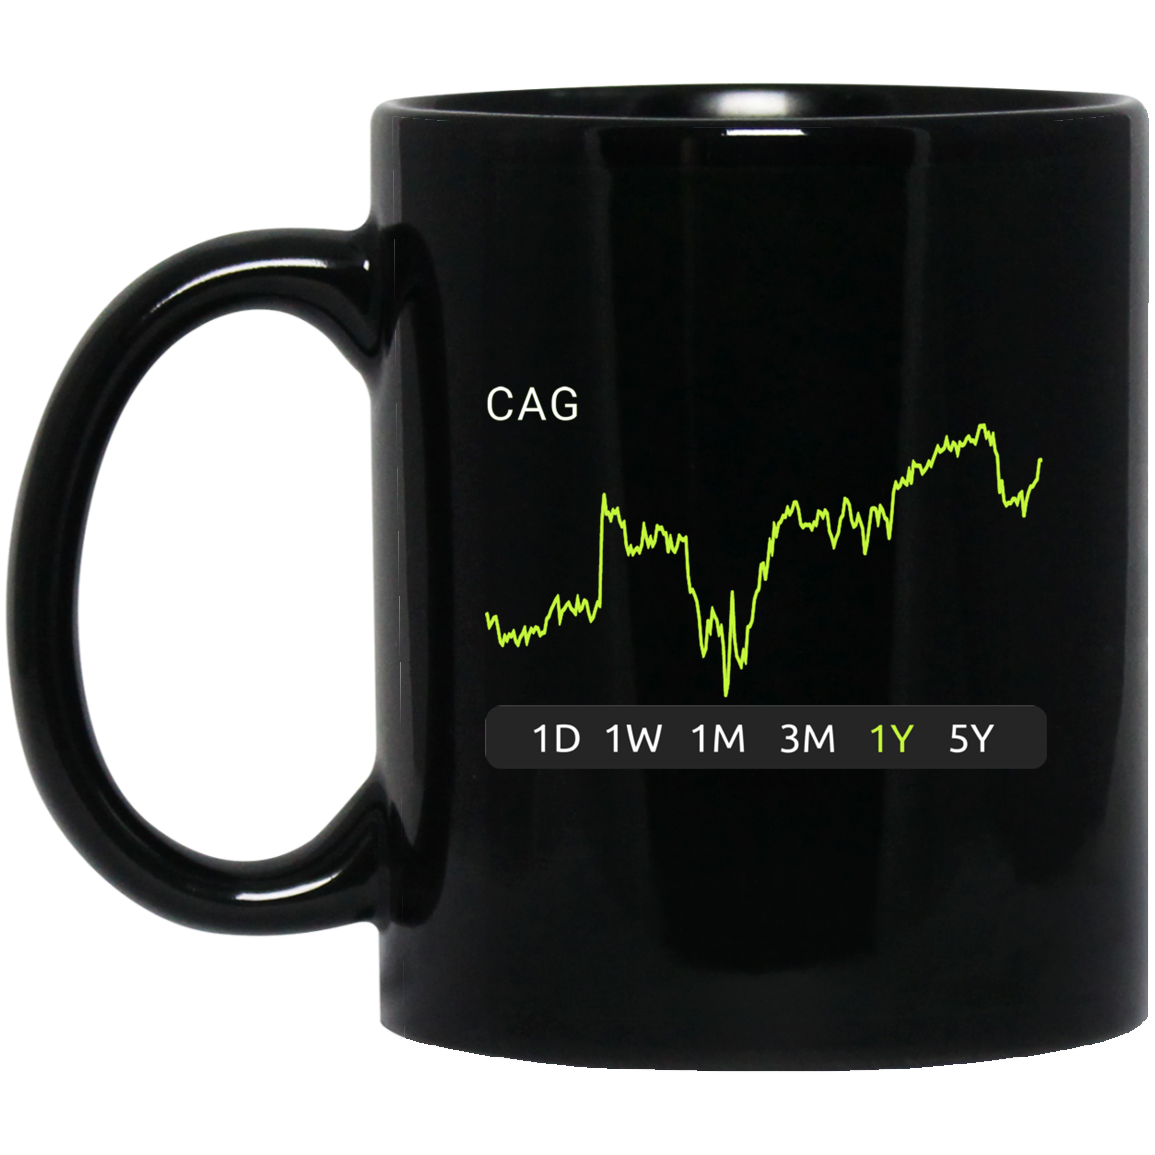 CAG Stock 1y  Mug